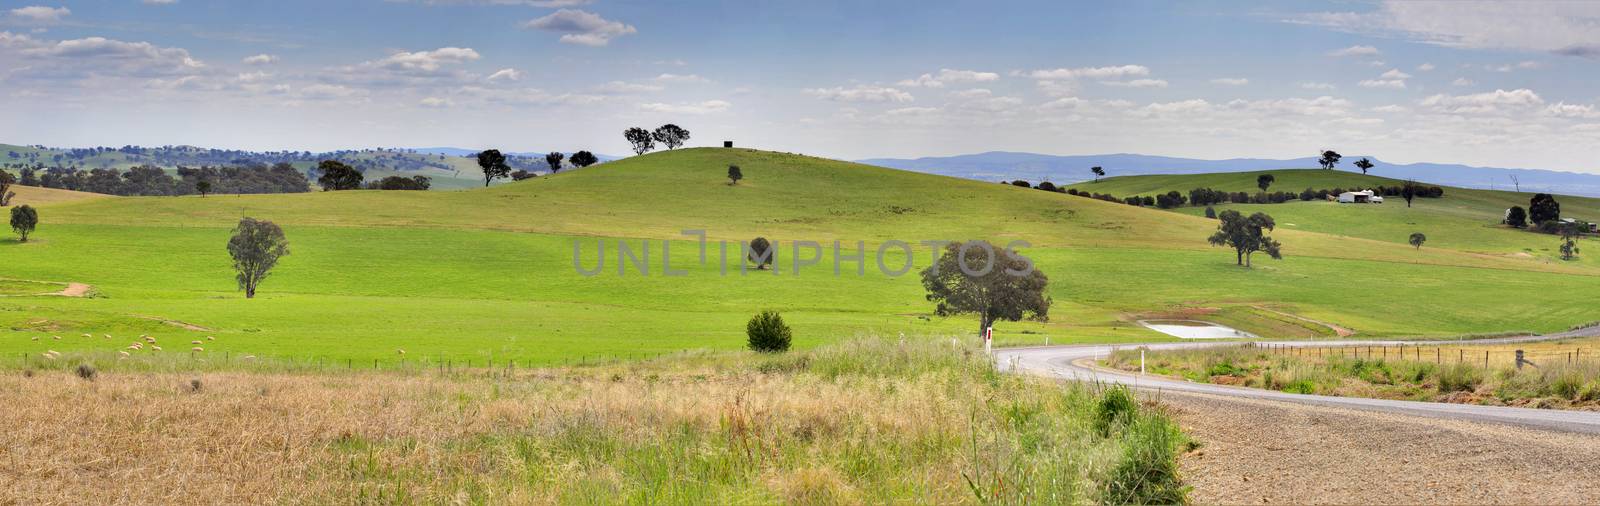 Hills of Mandurama Landscape by lovleah